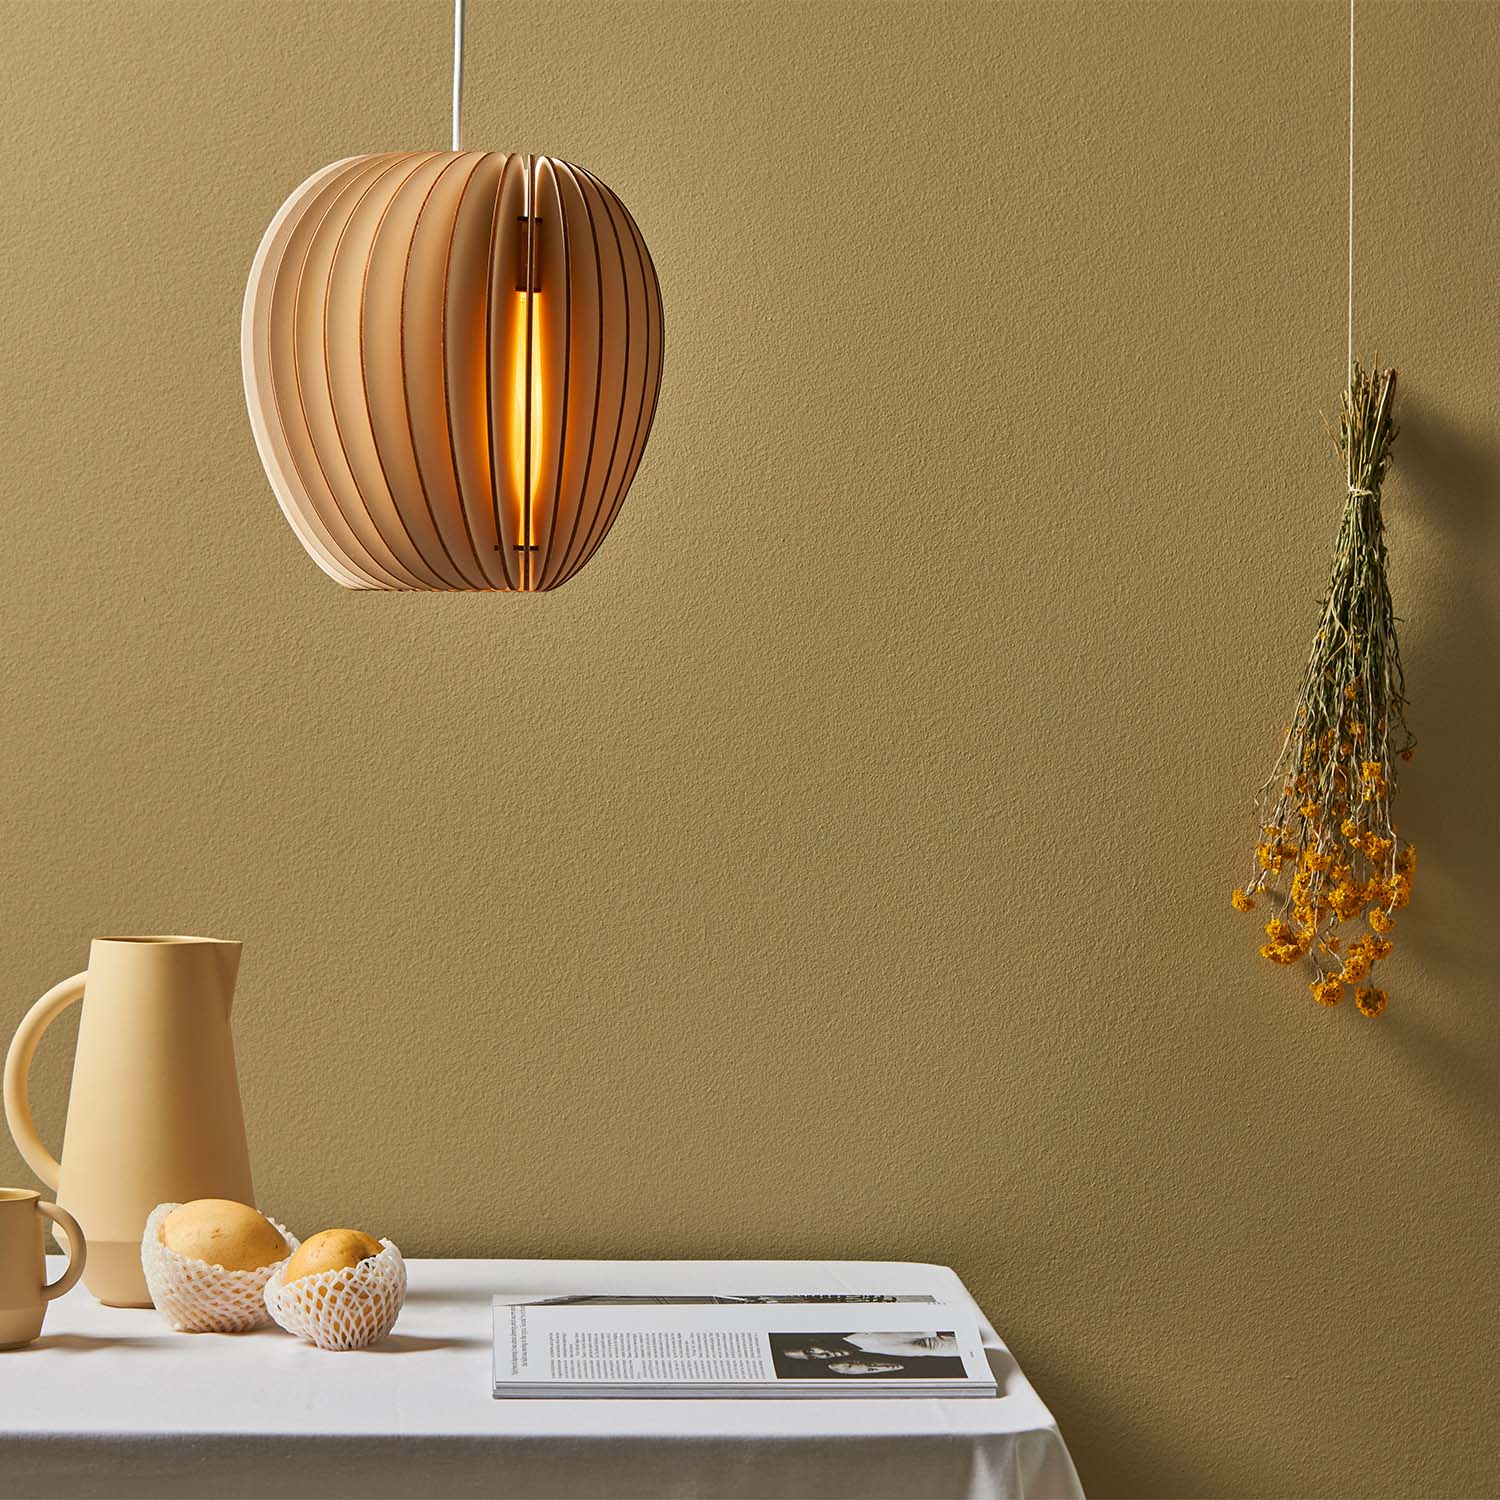 SERIES A PIRUM - Pendant light in designer poplar wood strip